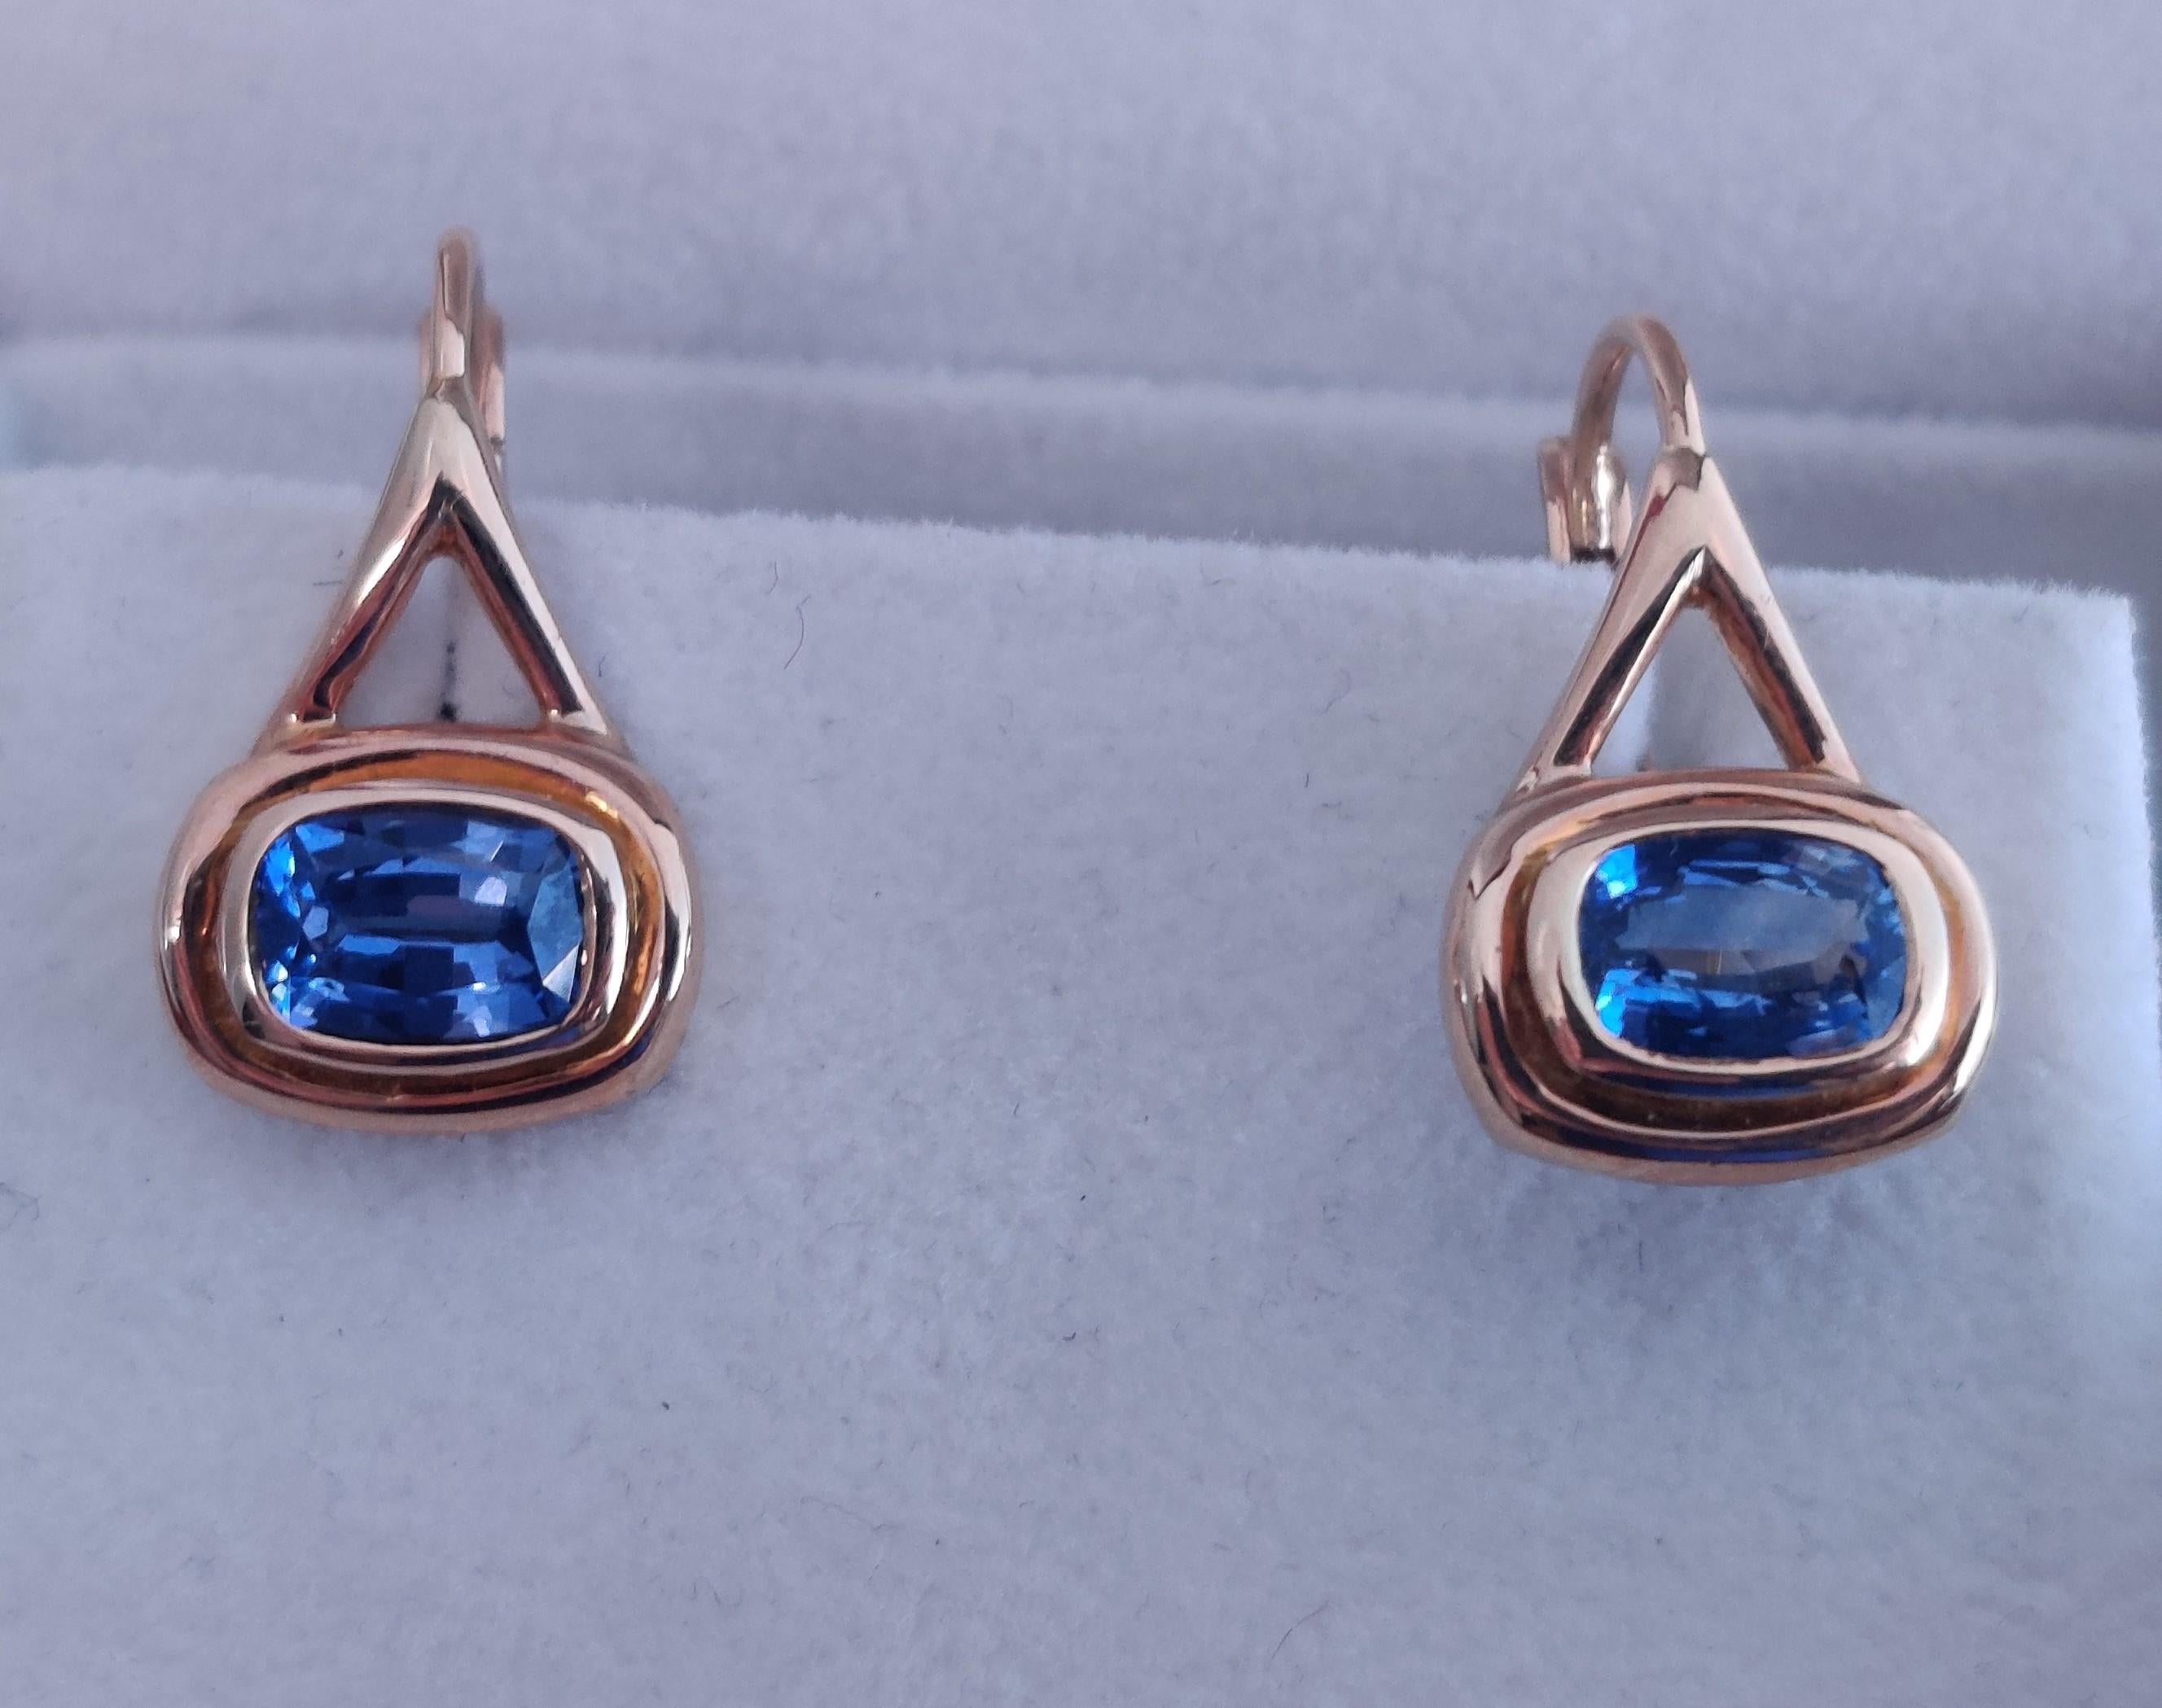 sapphire earrings hanger
18 k gold
hallmarked 750
2,33 ct sapphire
length 20 mm
wide 10 mm
weight 5,2 grams